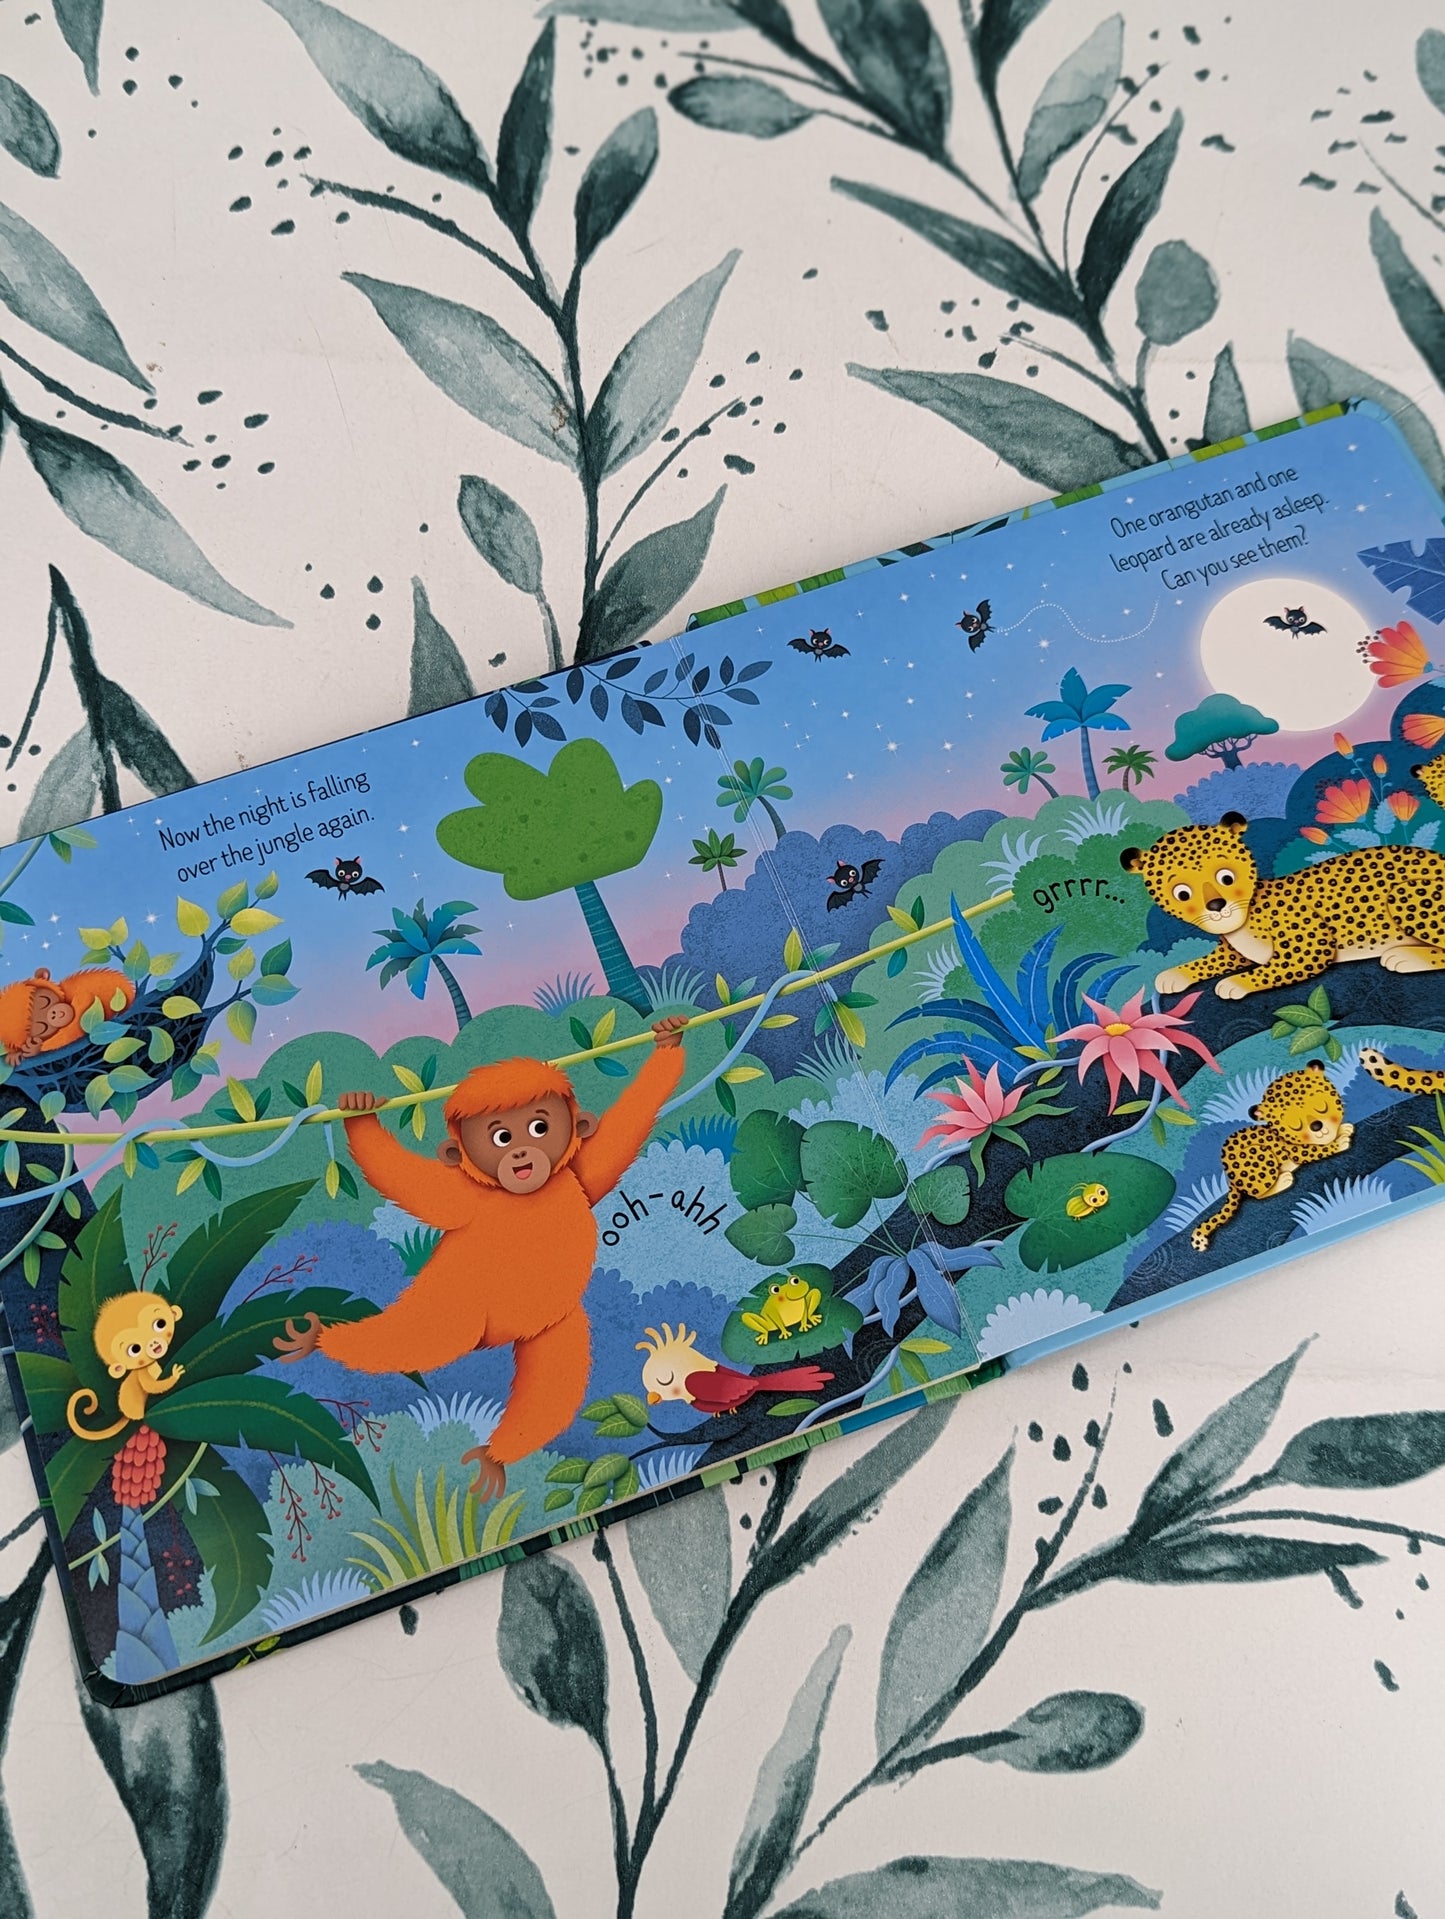 Usborne The Jungle (Board Book)